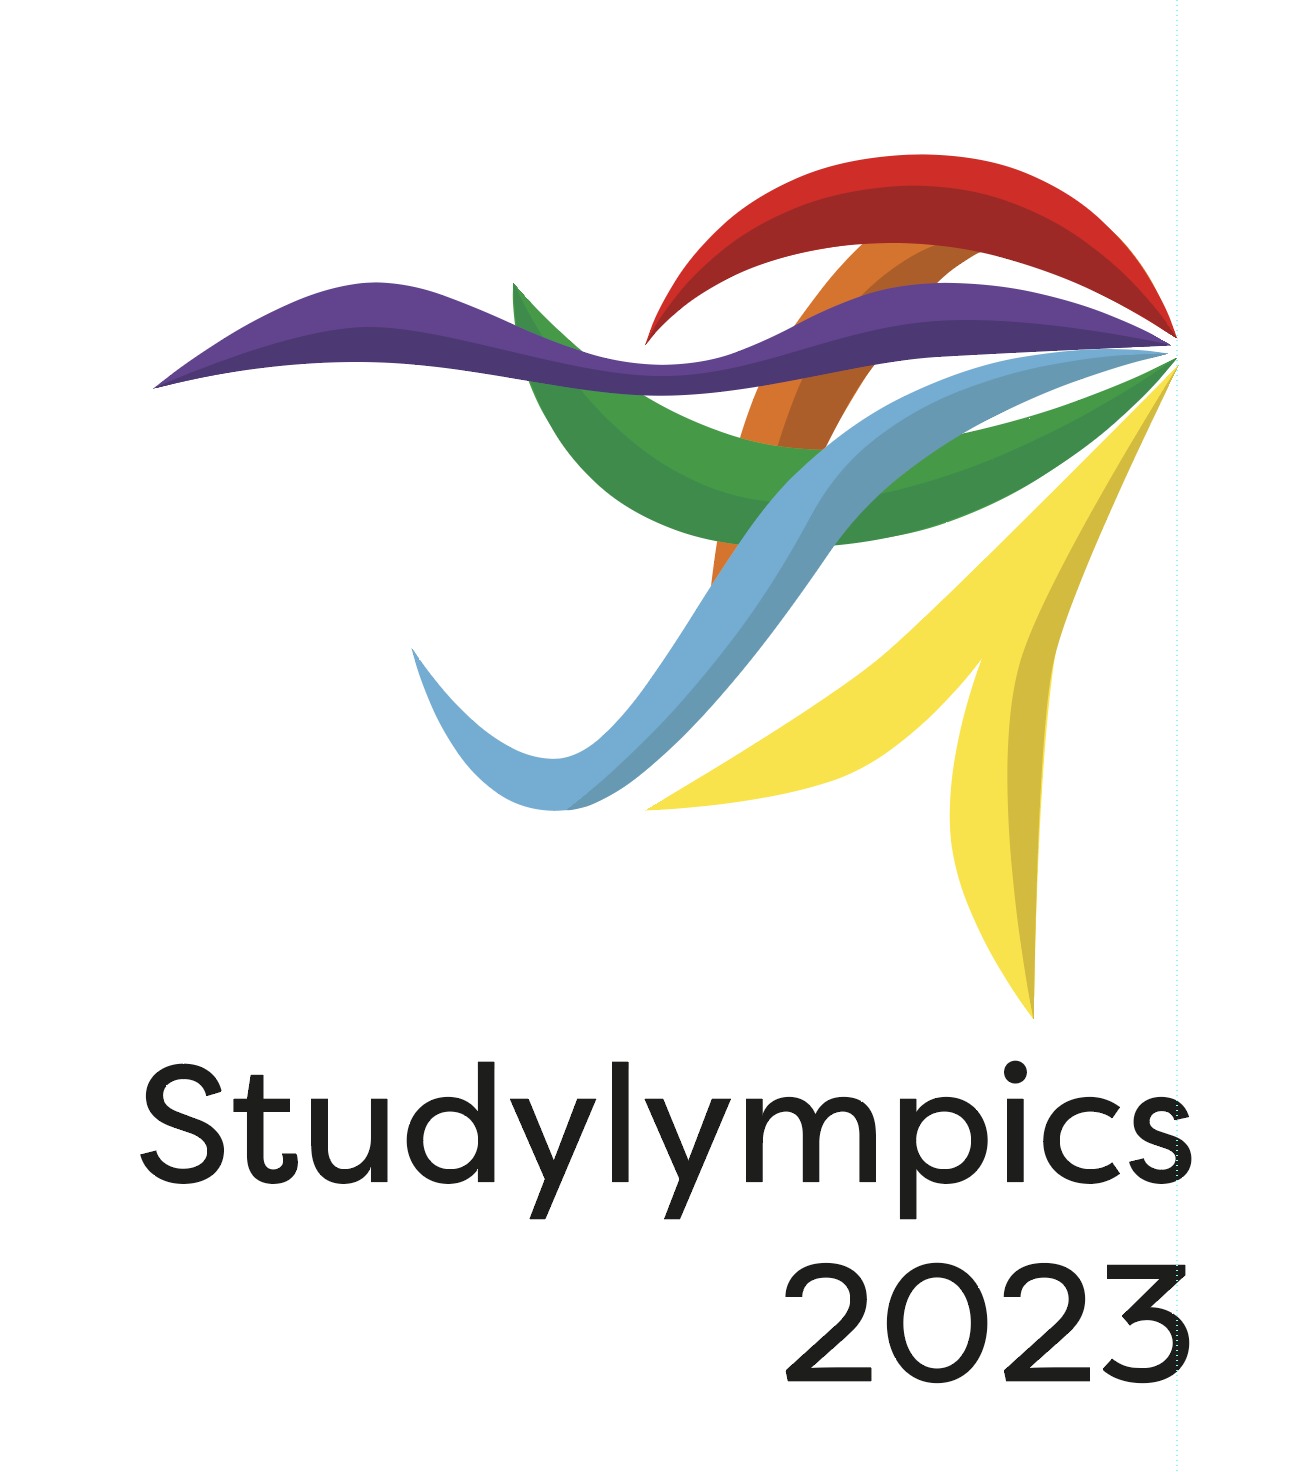 Studylympics 2023